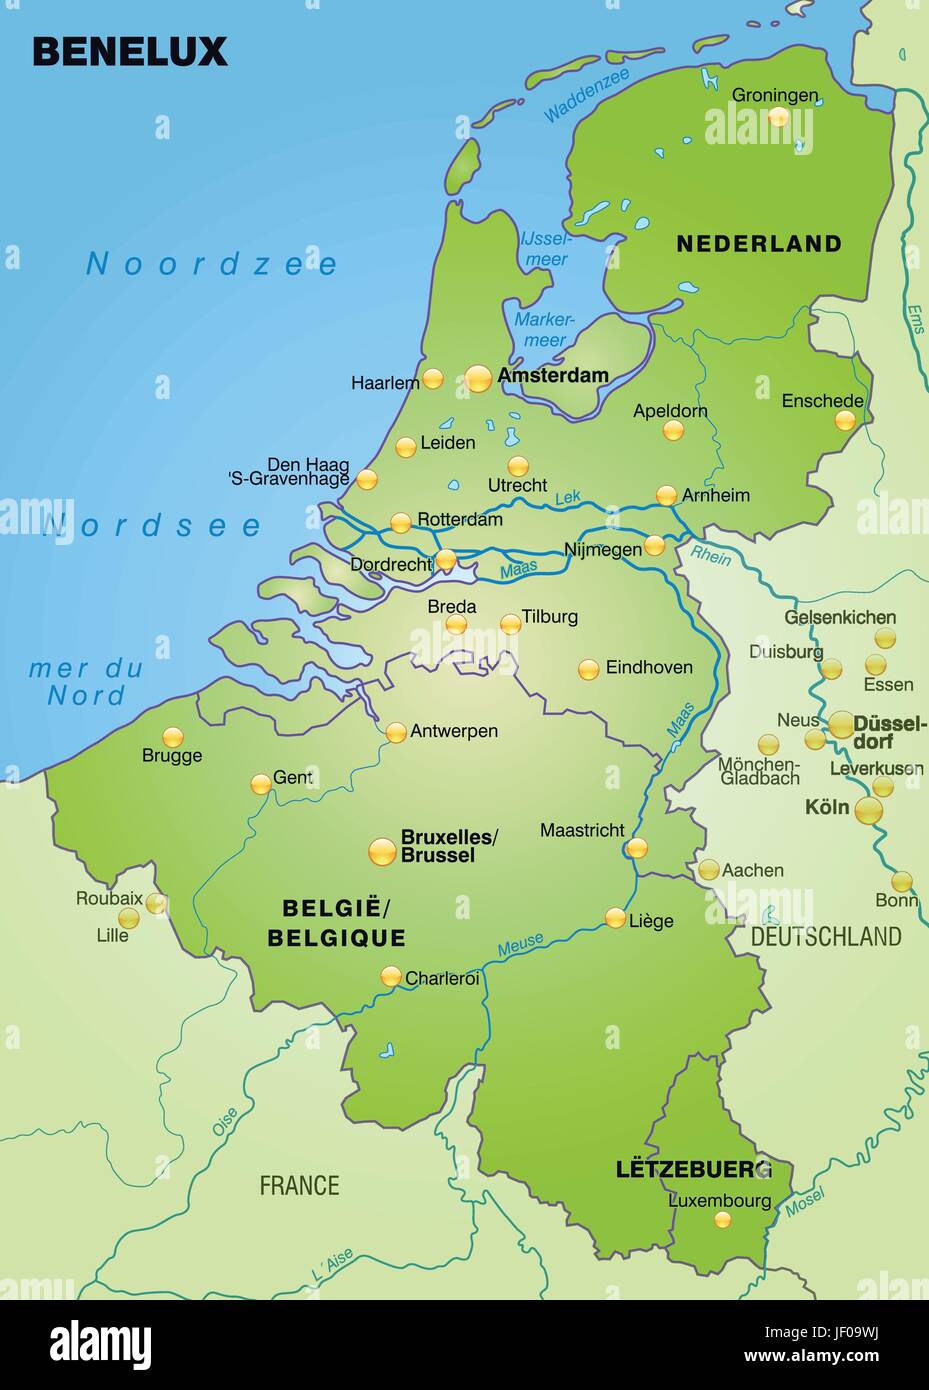 card, atlas, map of the world, map, belgium, netherlands, benelux, border, Stock Vector